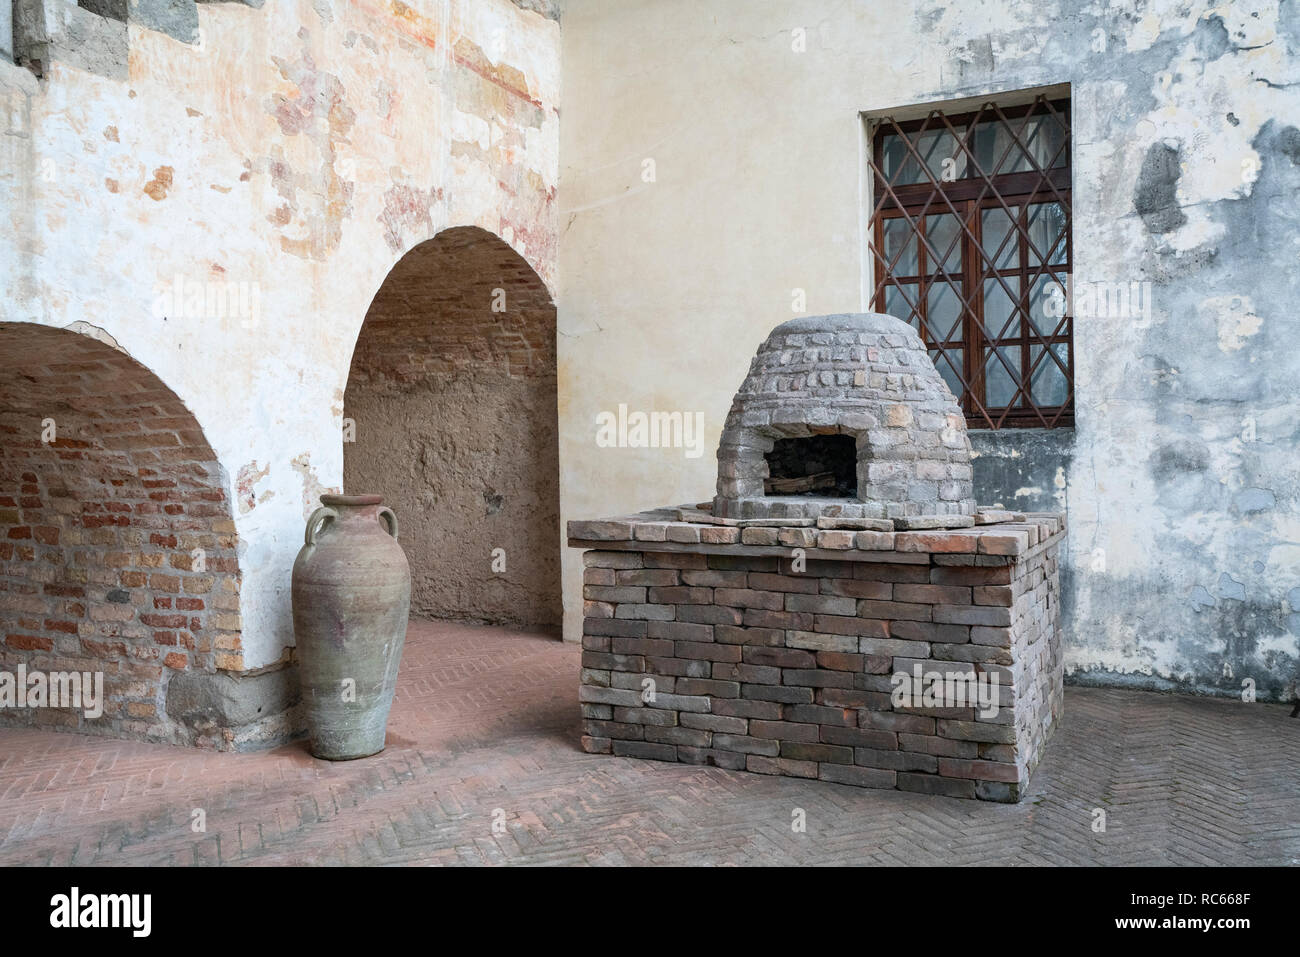 ancient oven in the courtyard of the medieval abbey of Sesto al Reghena, Friuli Venezia Giulia region, Italy Stock Photo